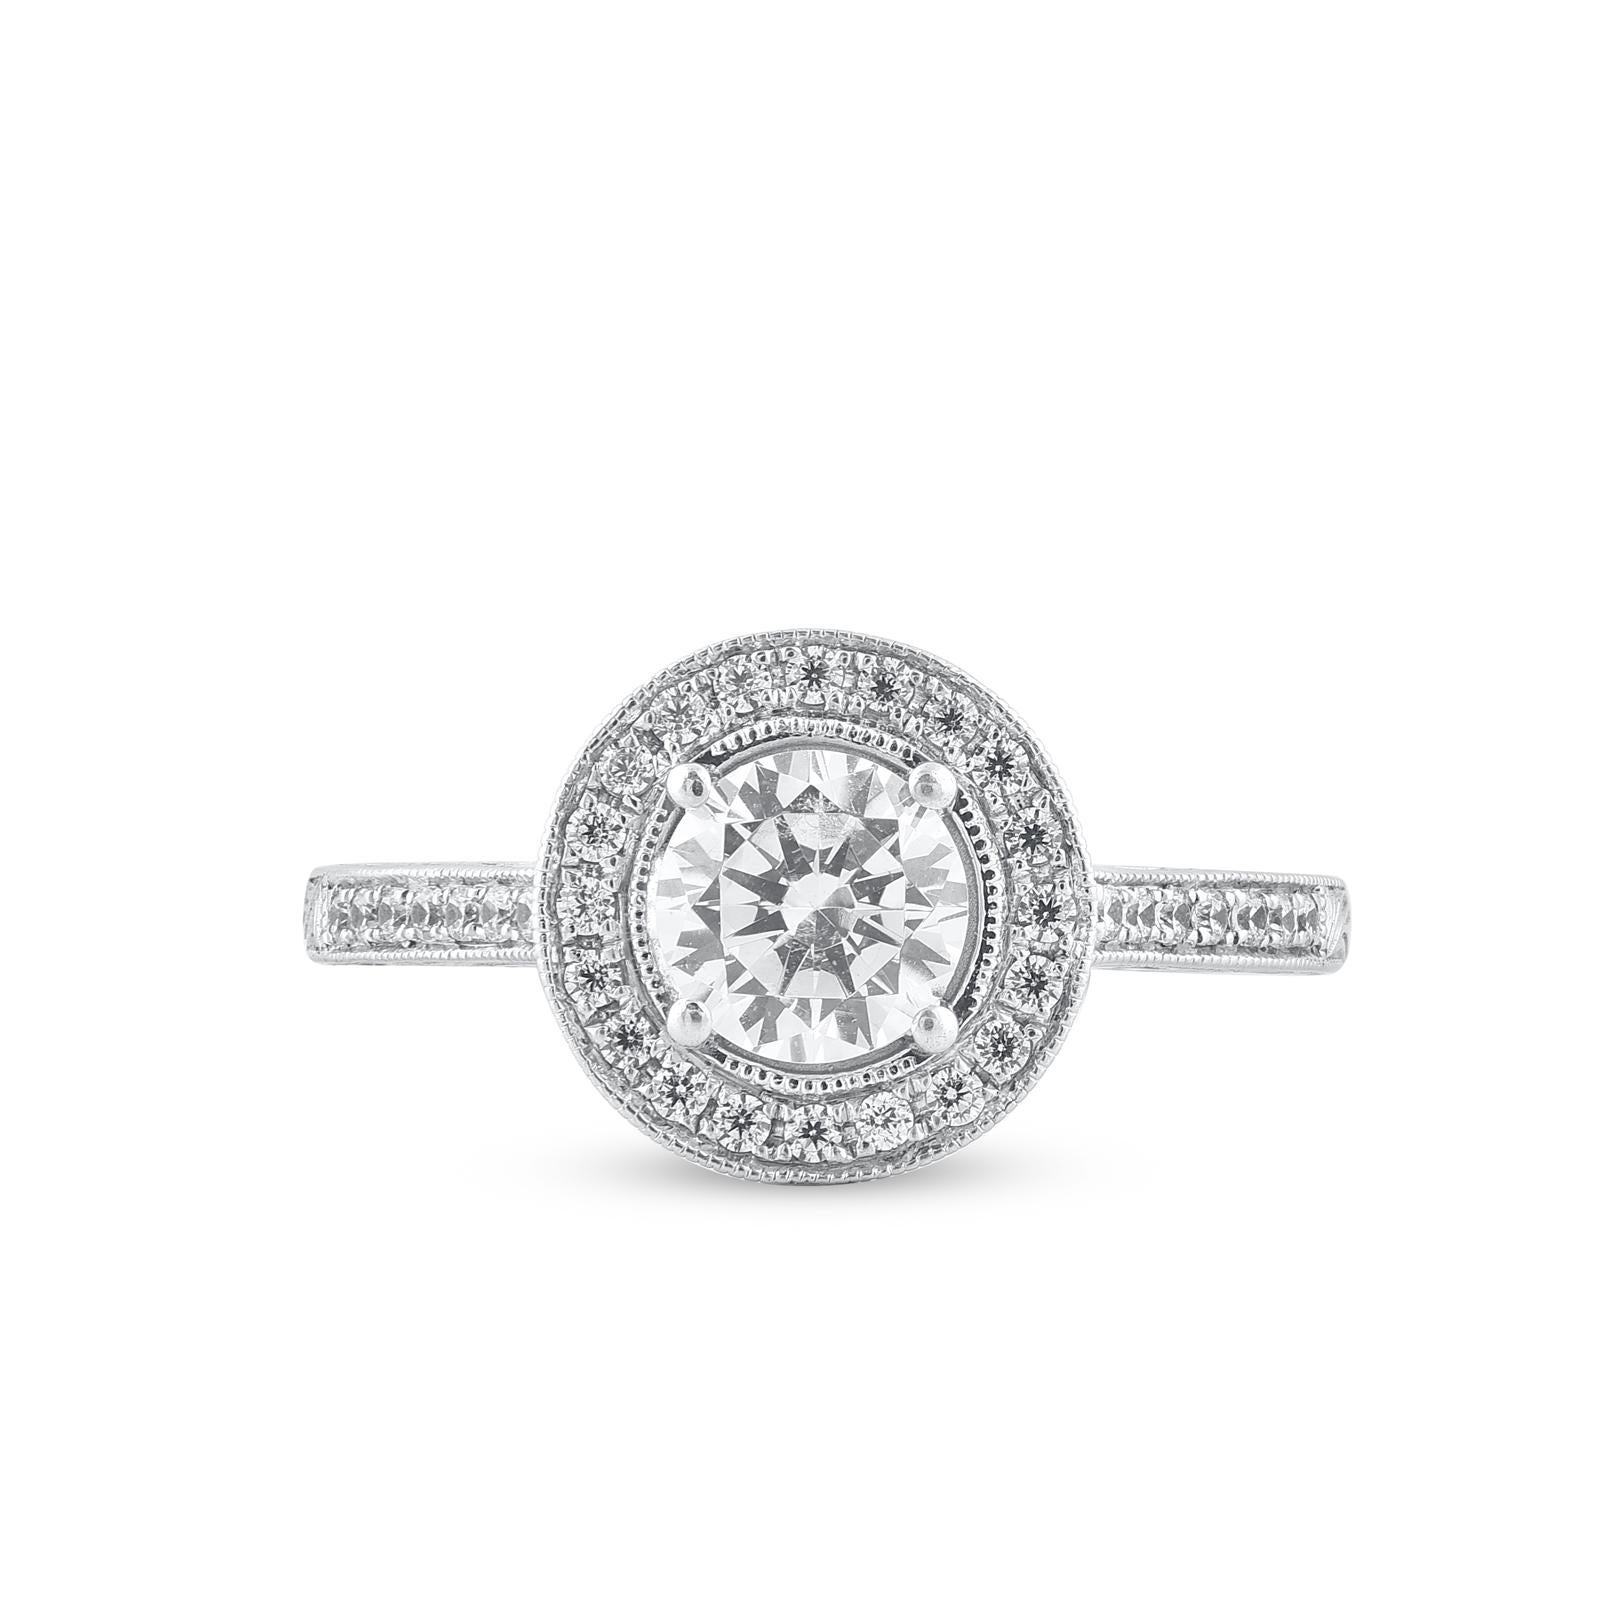 1.25 carat oval diamond ring on hand